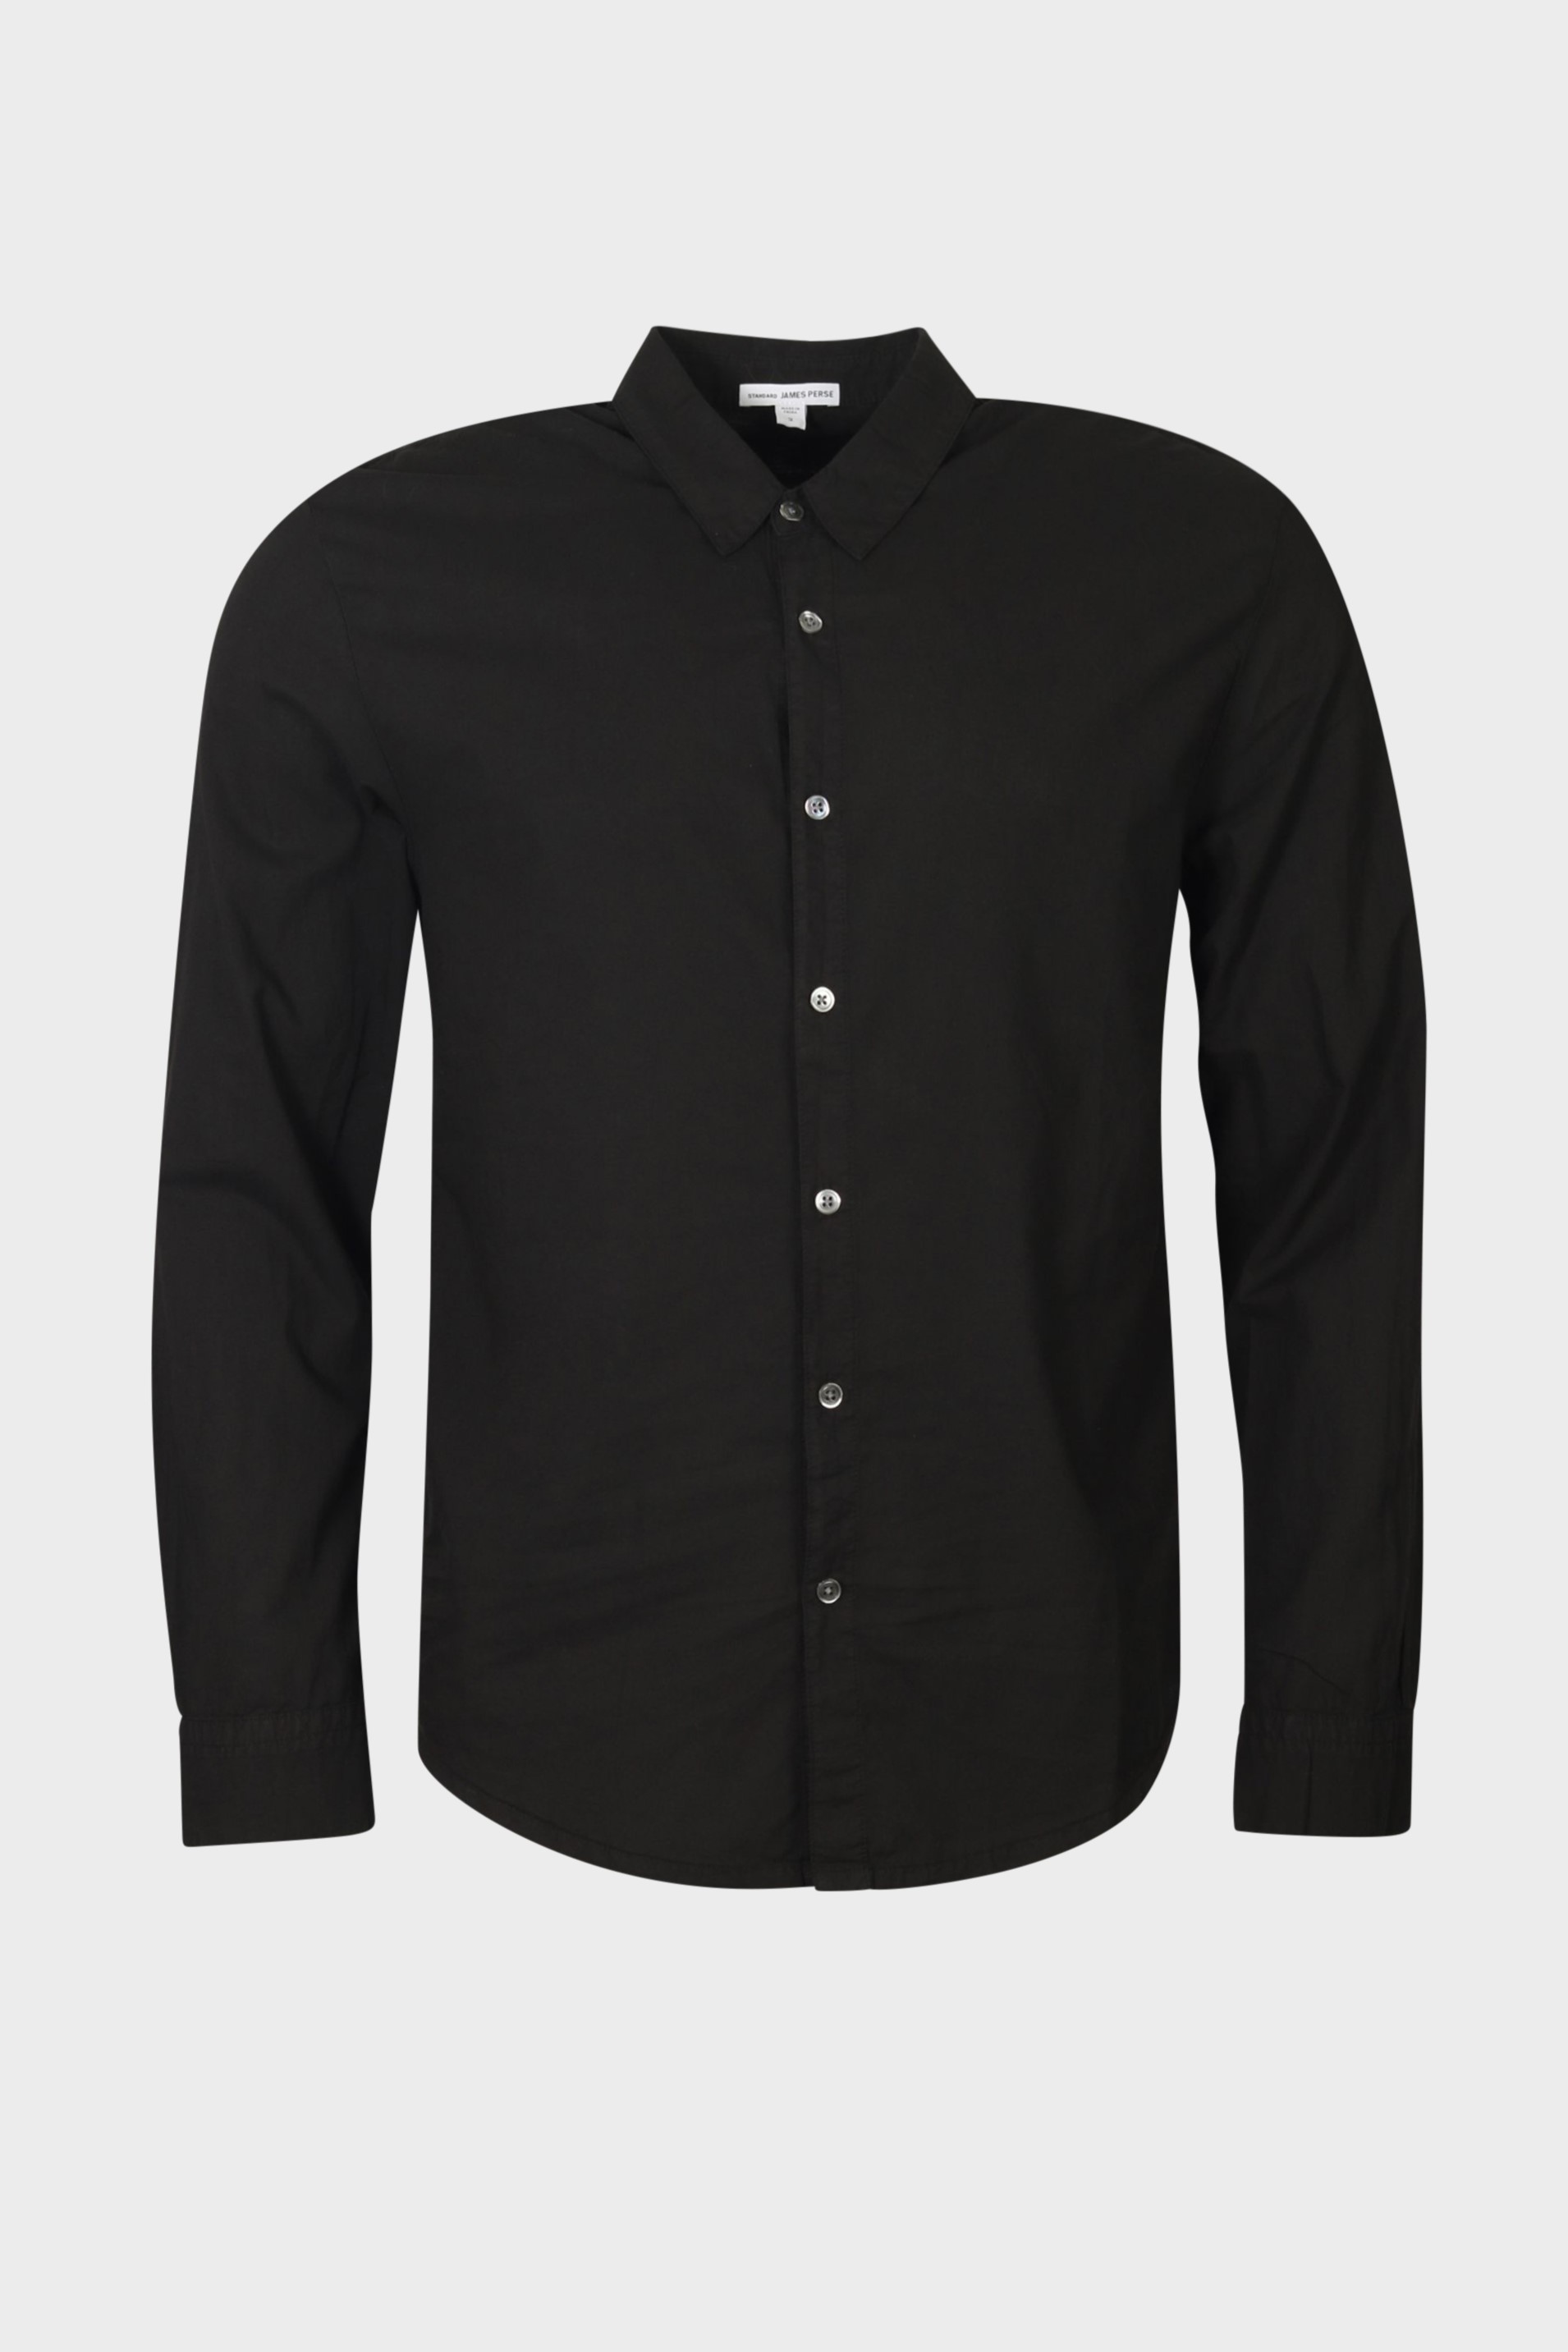 James Perse Standard Shirt Black